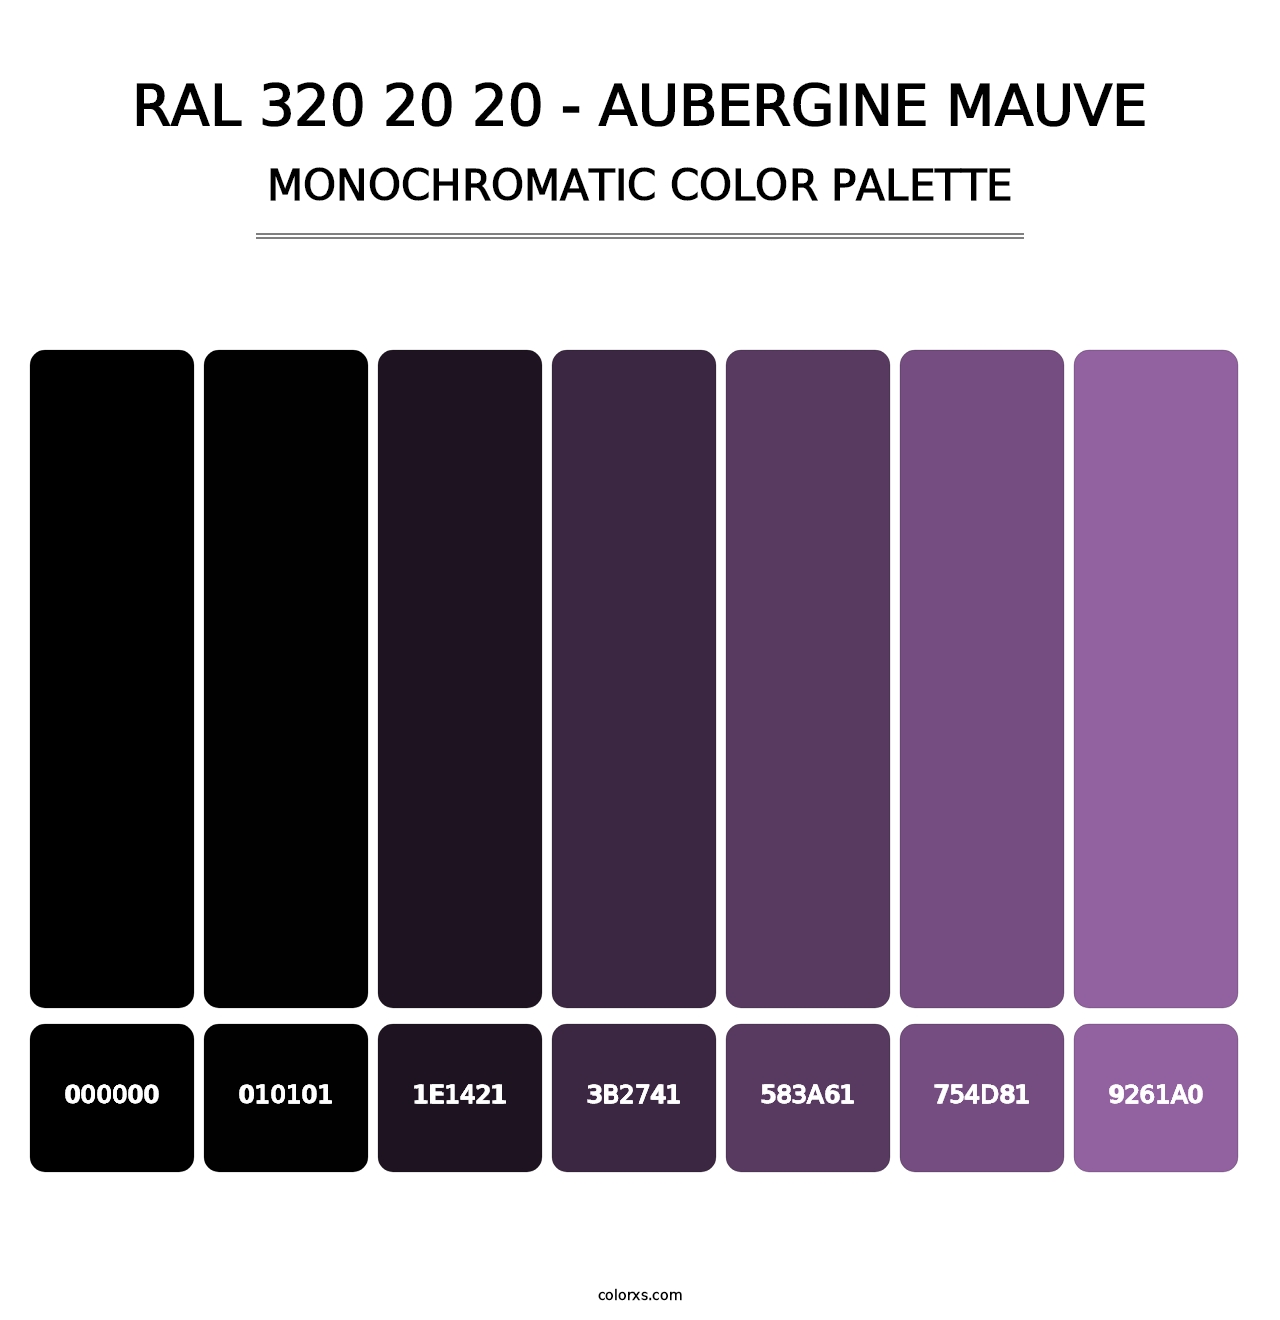 RAL 320 20 20 - Aubergine Mauve - Monochromatic Color Palette